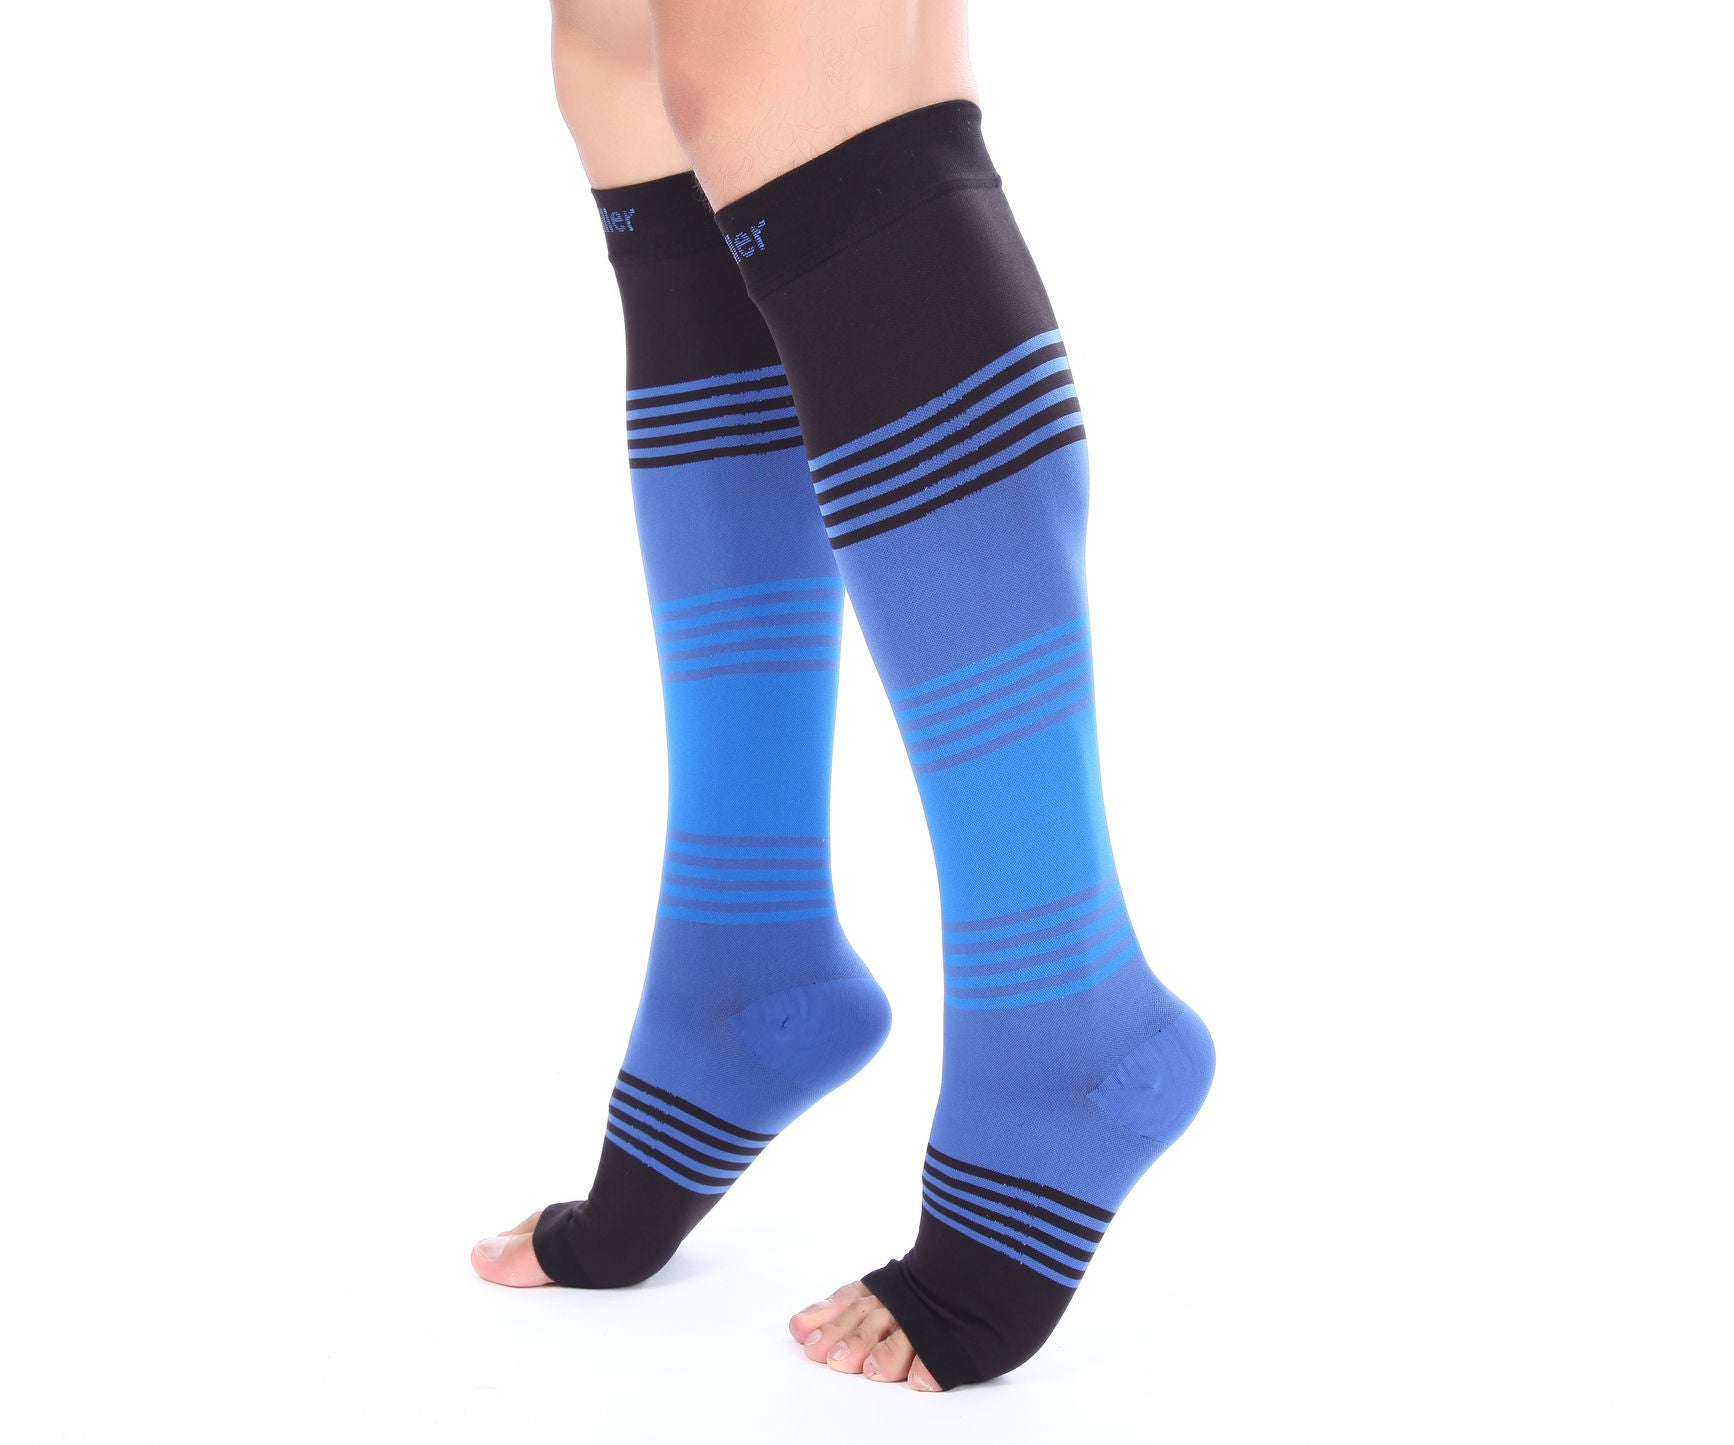 Open Toe Compression Socks 20-30 mmHg 3 Colors – Doc Miller